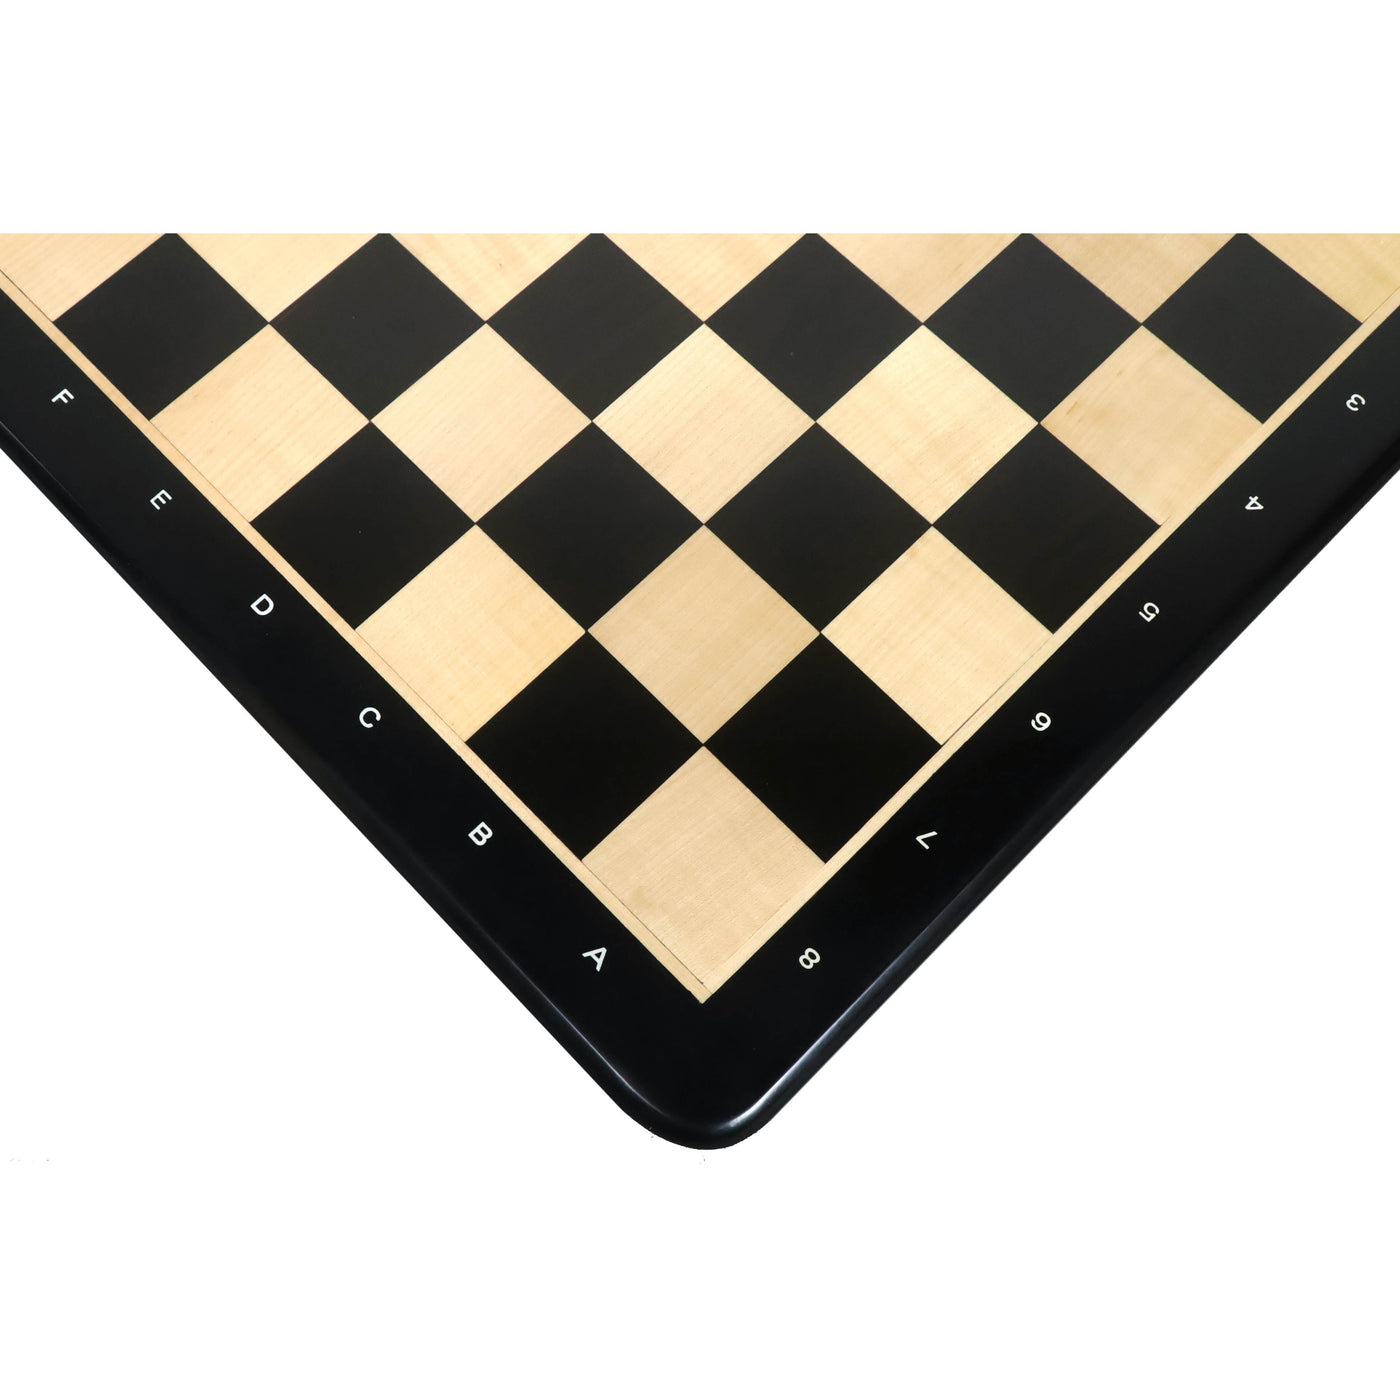 Ebony Wood & Maple Wood Chess board - Chess Storage Box - Algebraic Notations